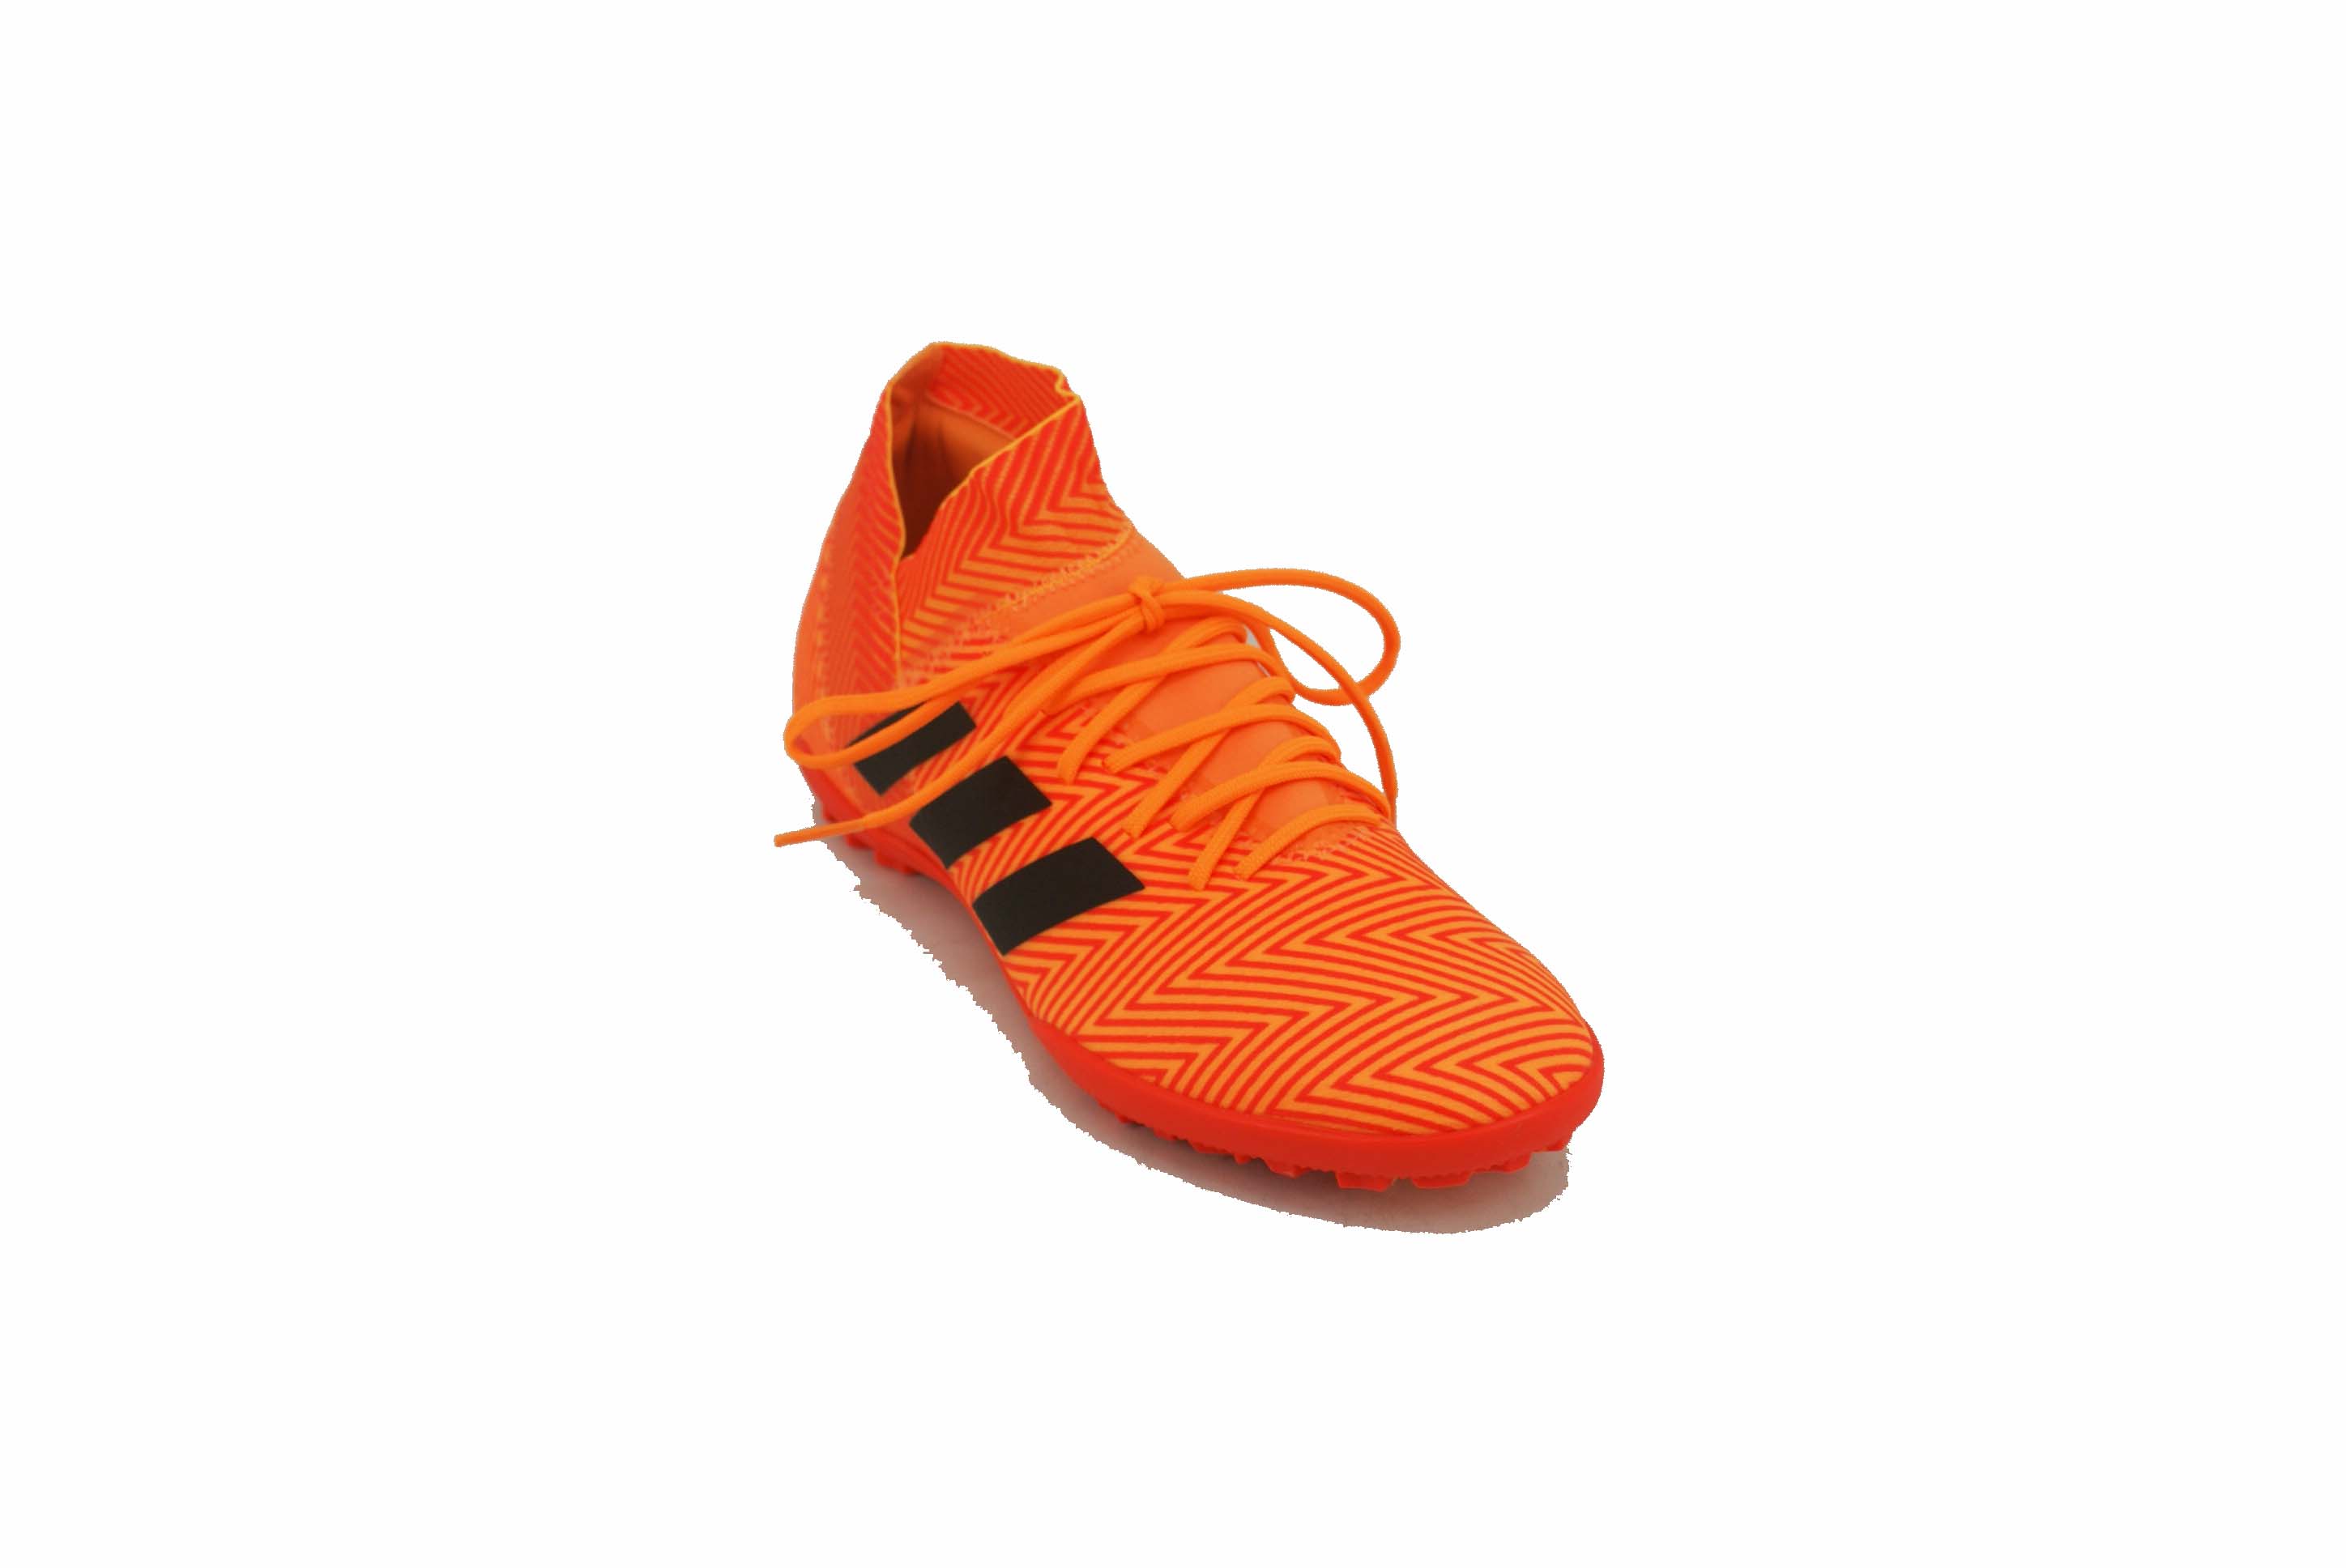 Botin Adidas Nemeziz Tango 18.3 Naranja/Negro Hombre Deporfan - Zapatillas  - E-Shop